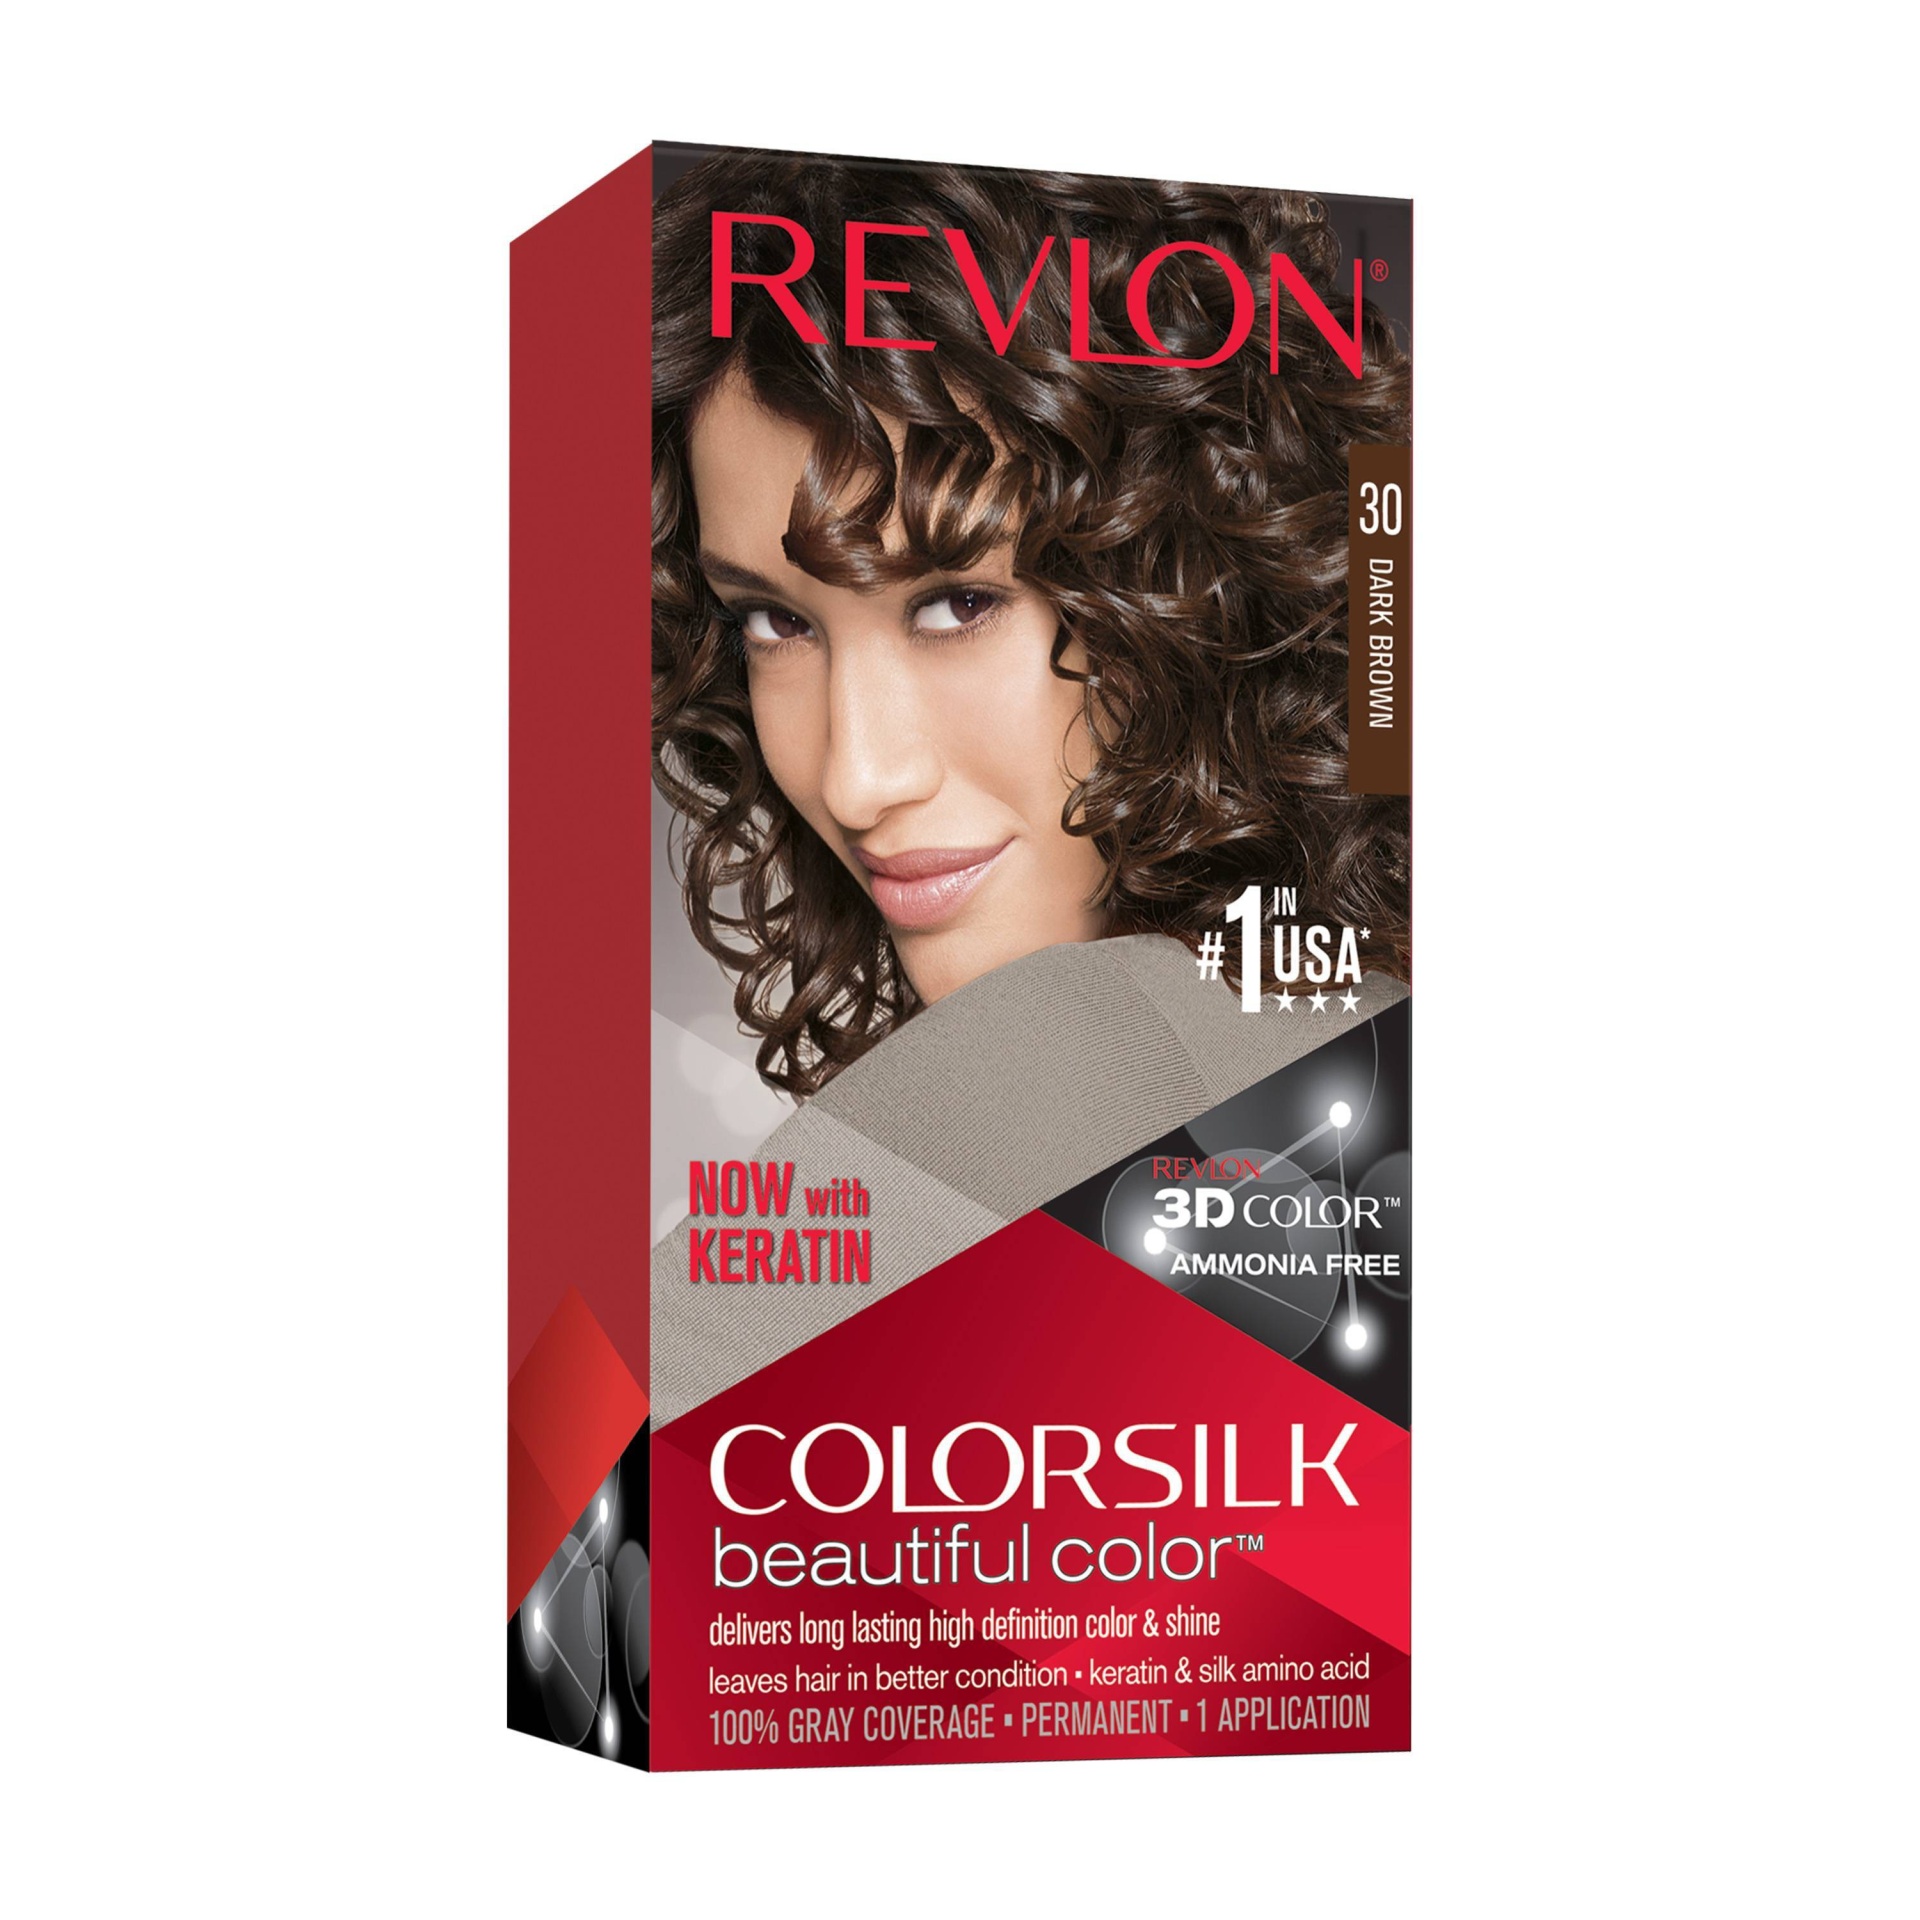 Revlon Colorsilk Dark Brown Hair Color Kit 1 kit | Shipt